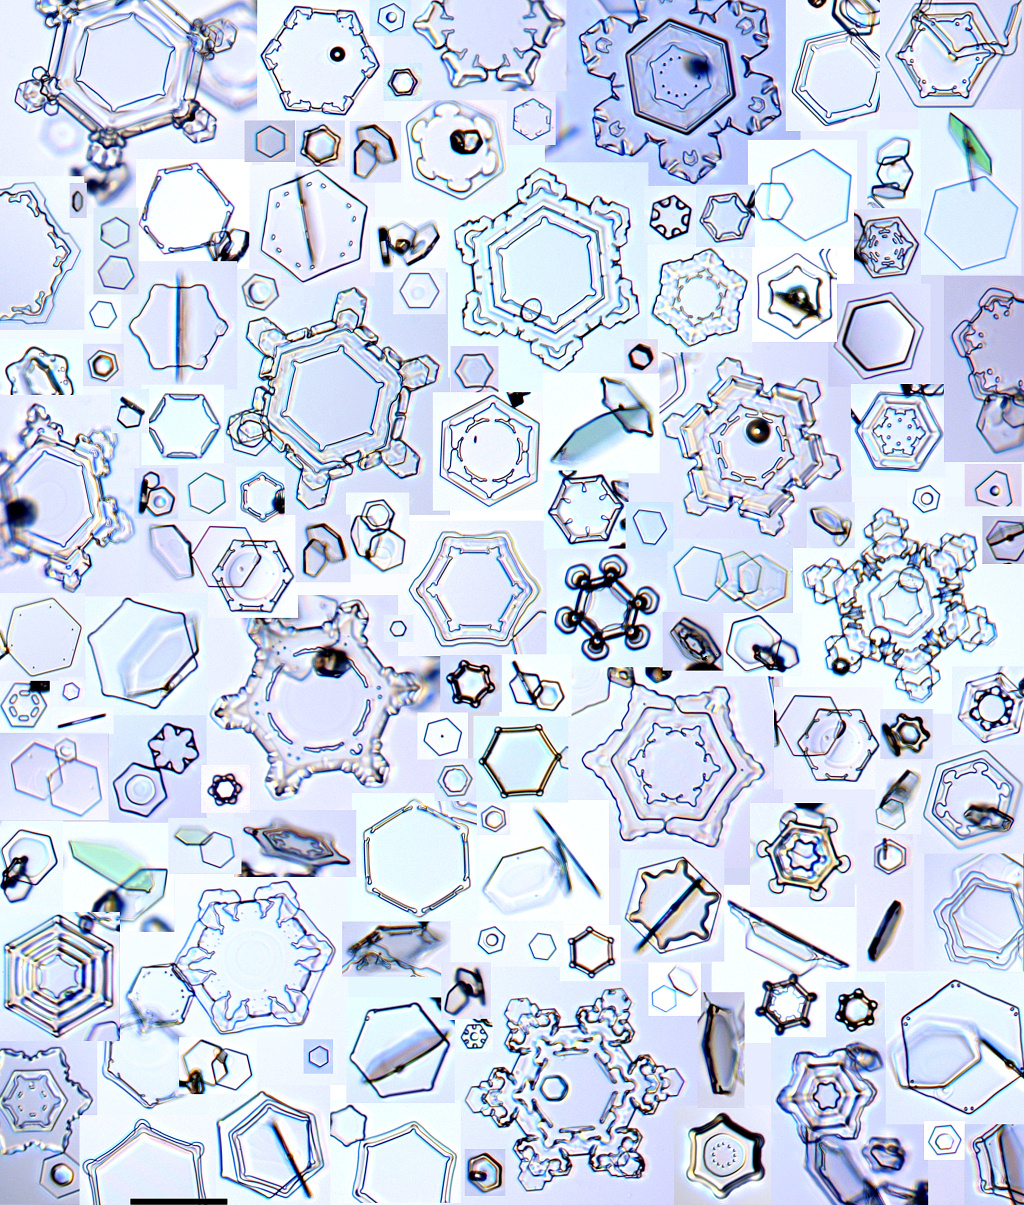 freezer-snowflakes-snowcrystals